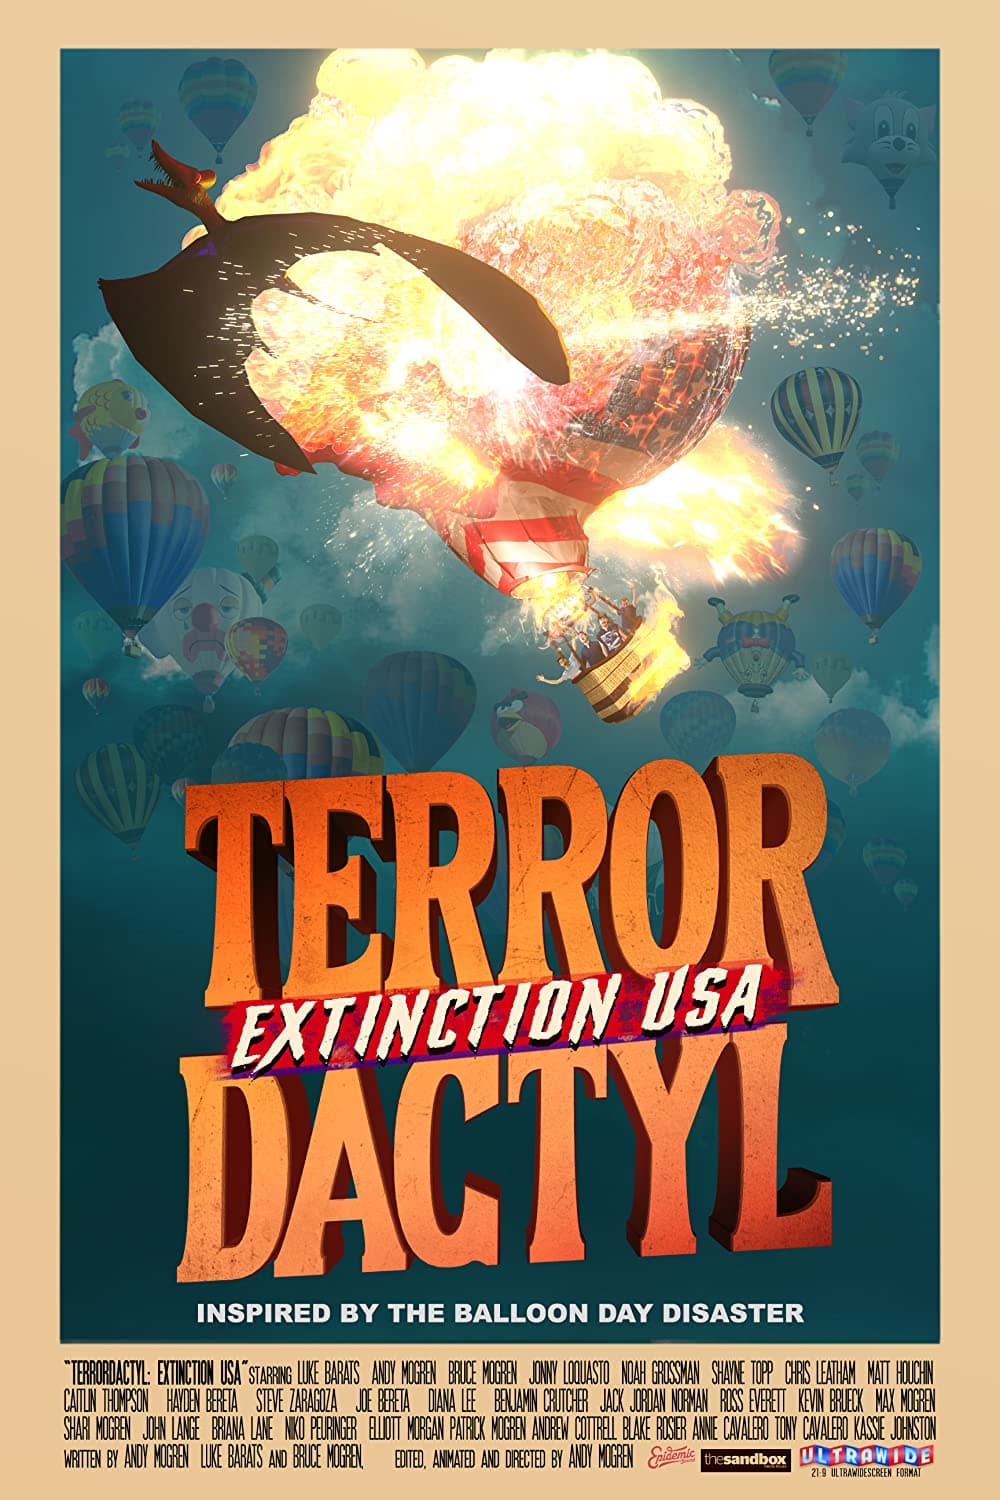 Terrordactyl: Extinction USA